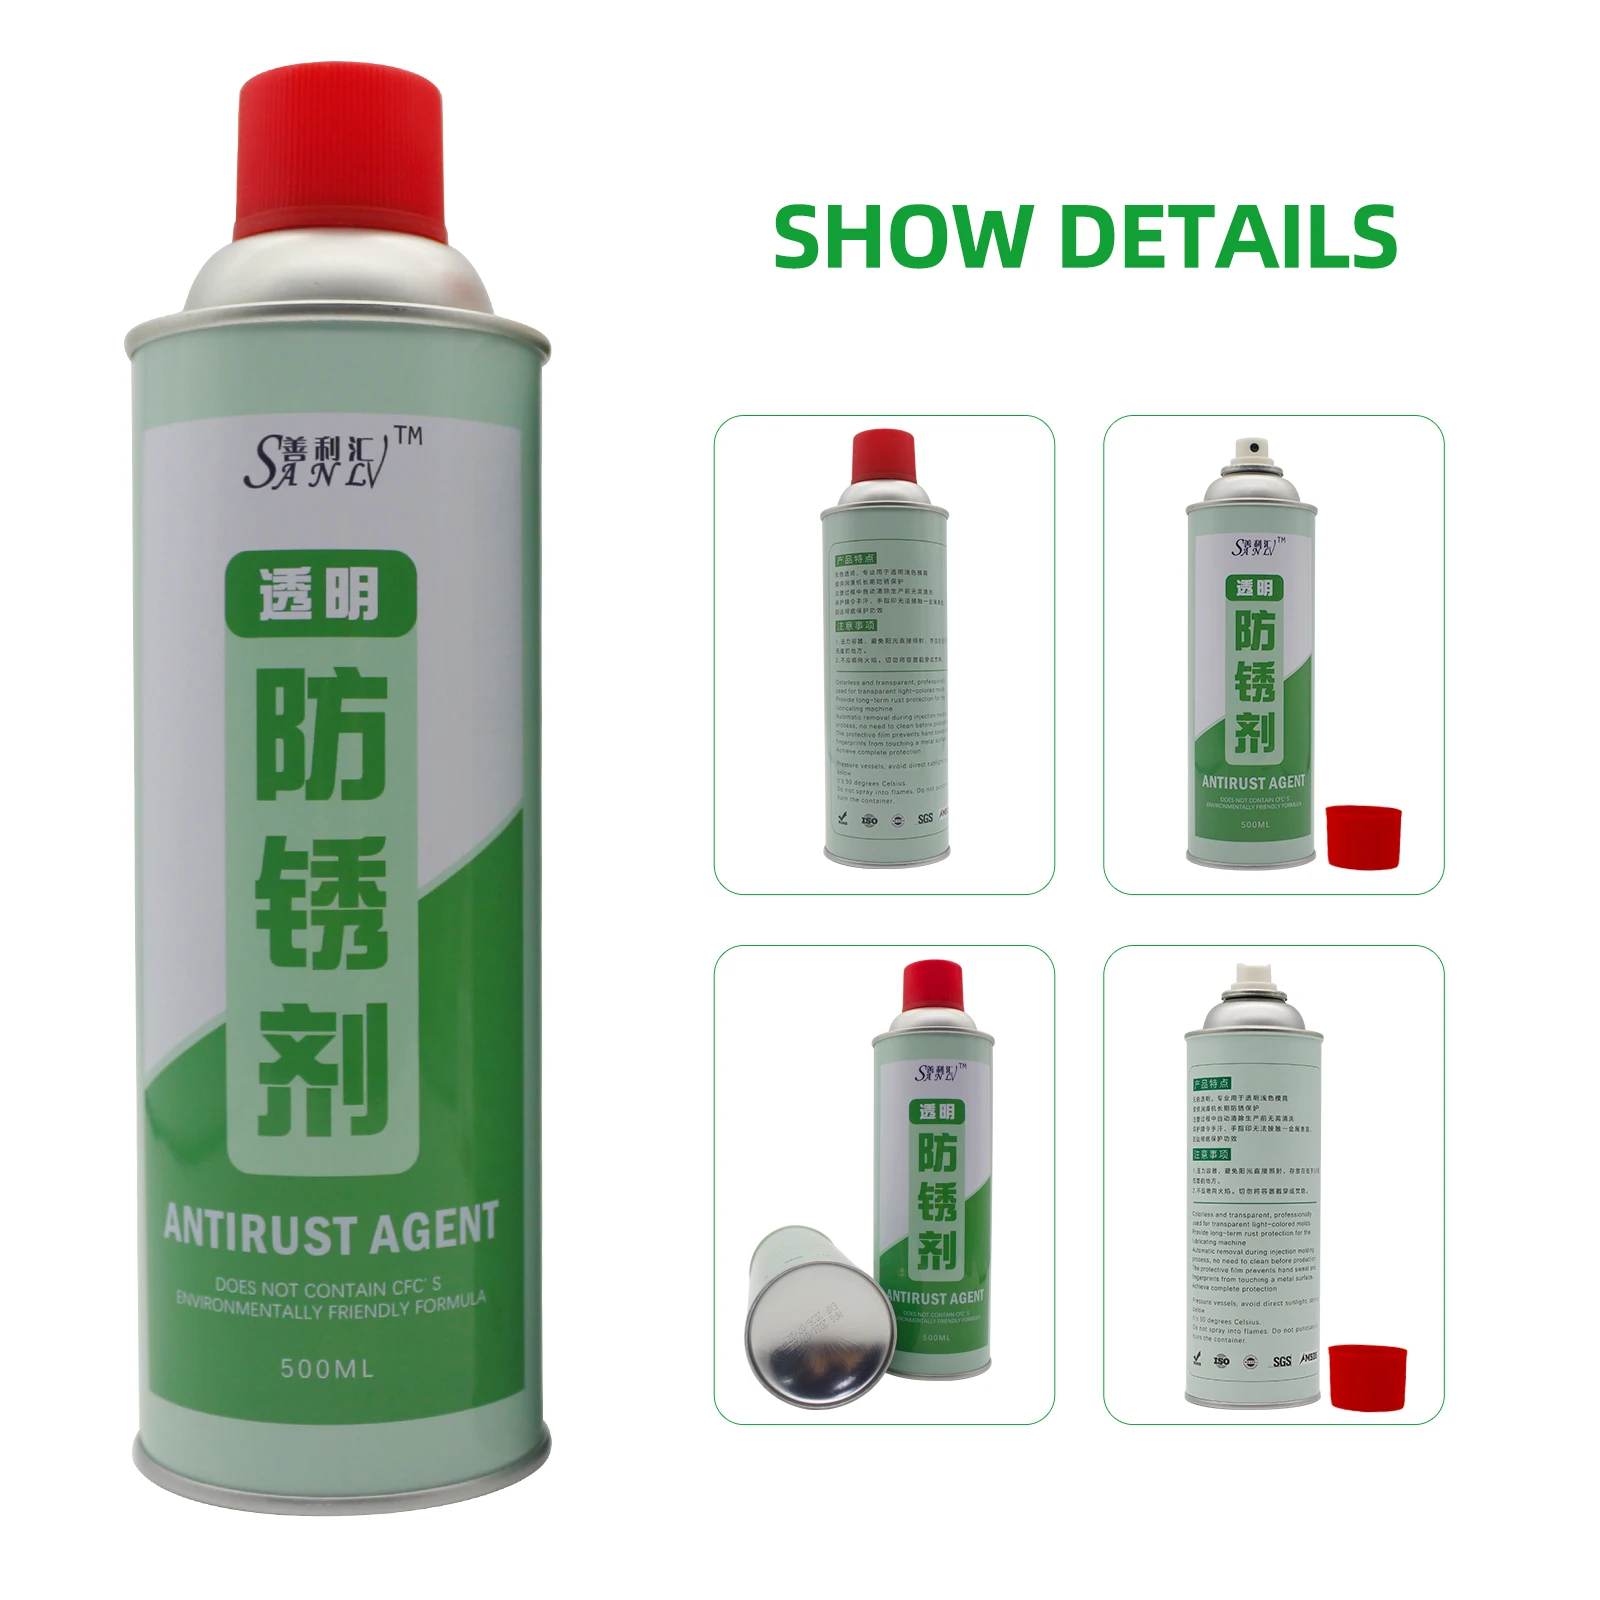 Transparent mold anti-rust spray colorless anti-rust soft film transparent rust Inhibitor